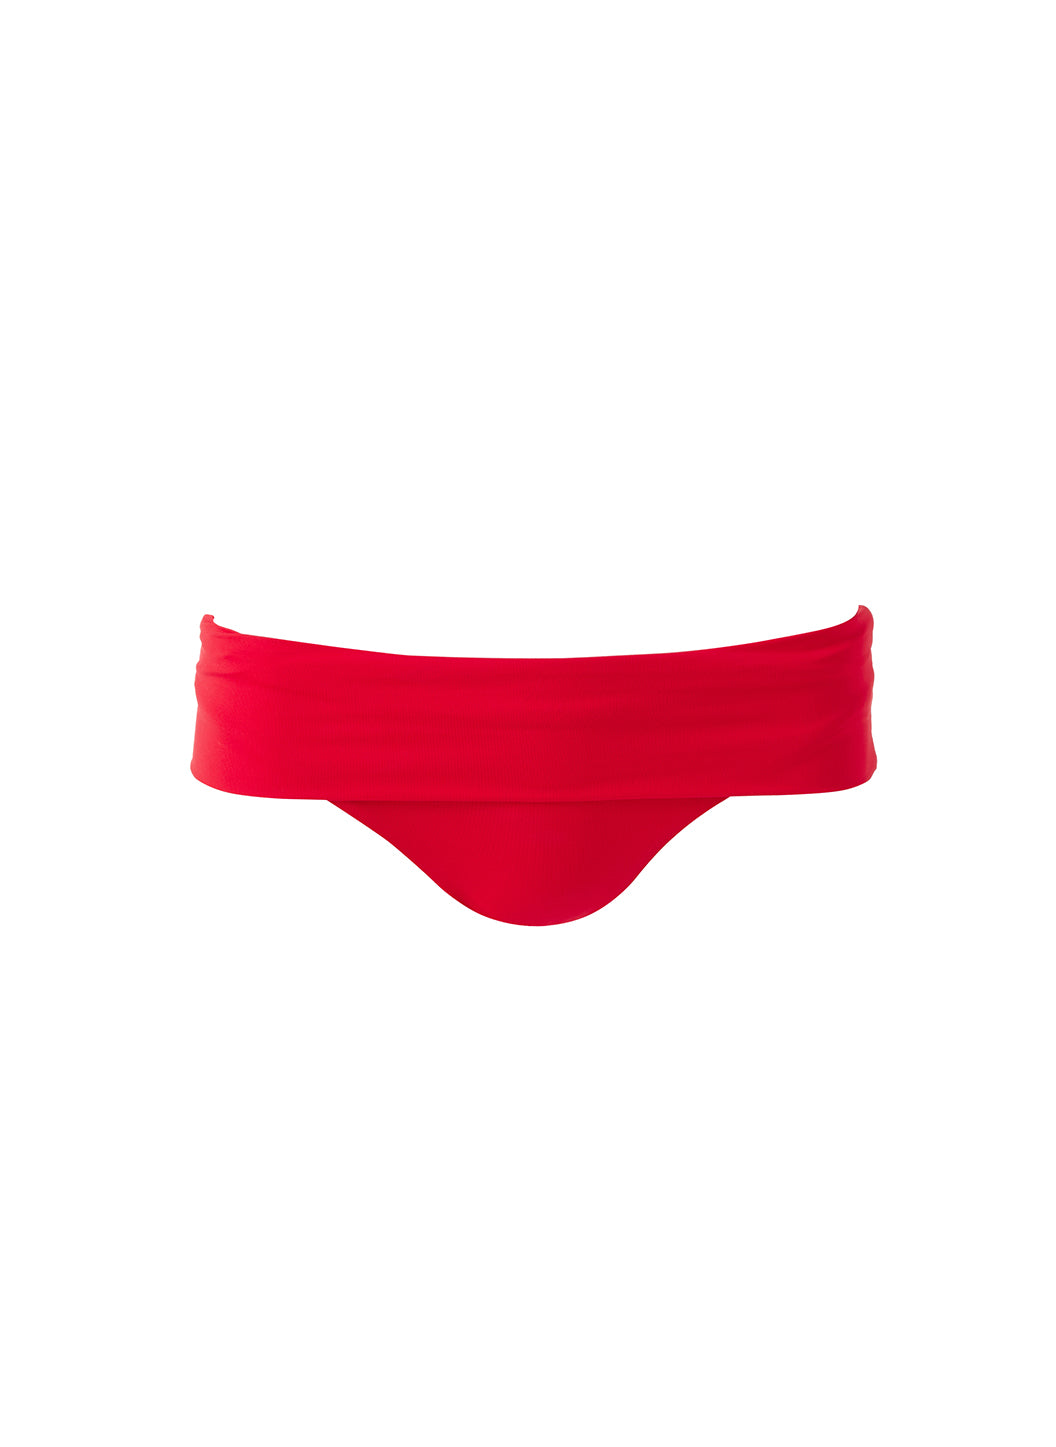 brussels-red-bikini-bottom_cutouts_2024